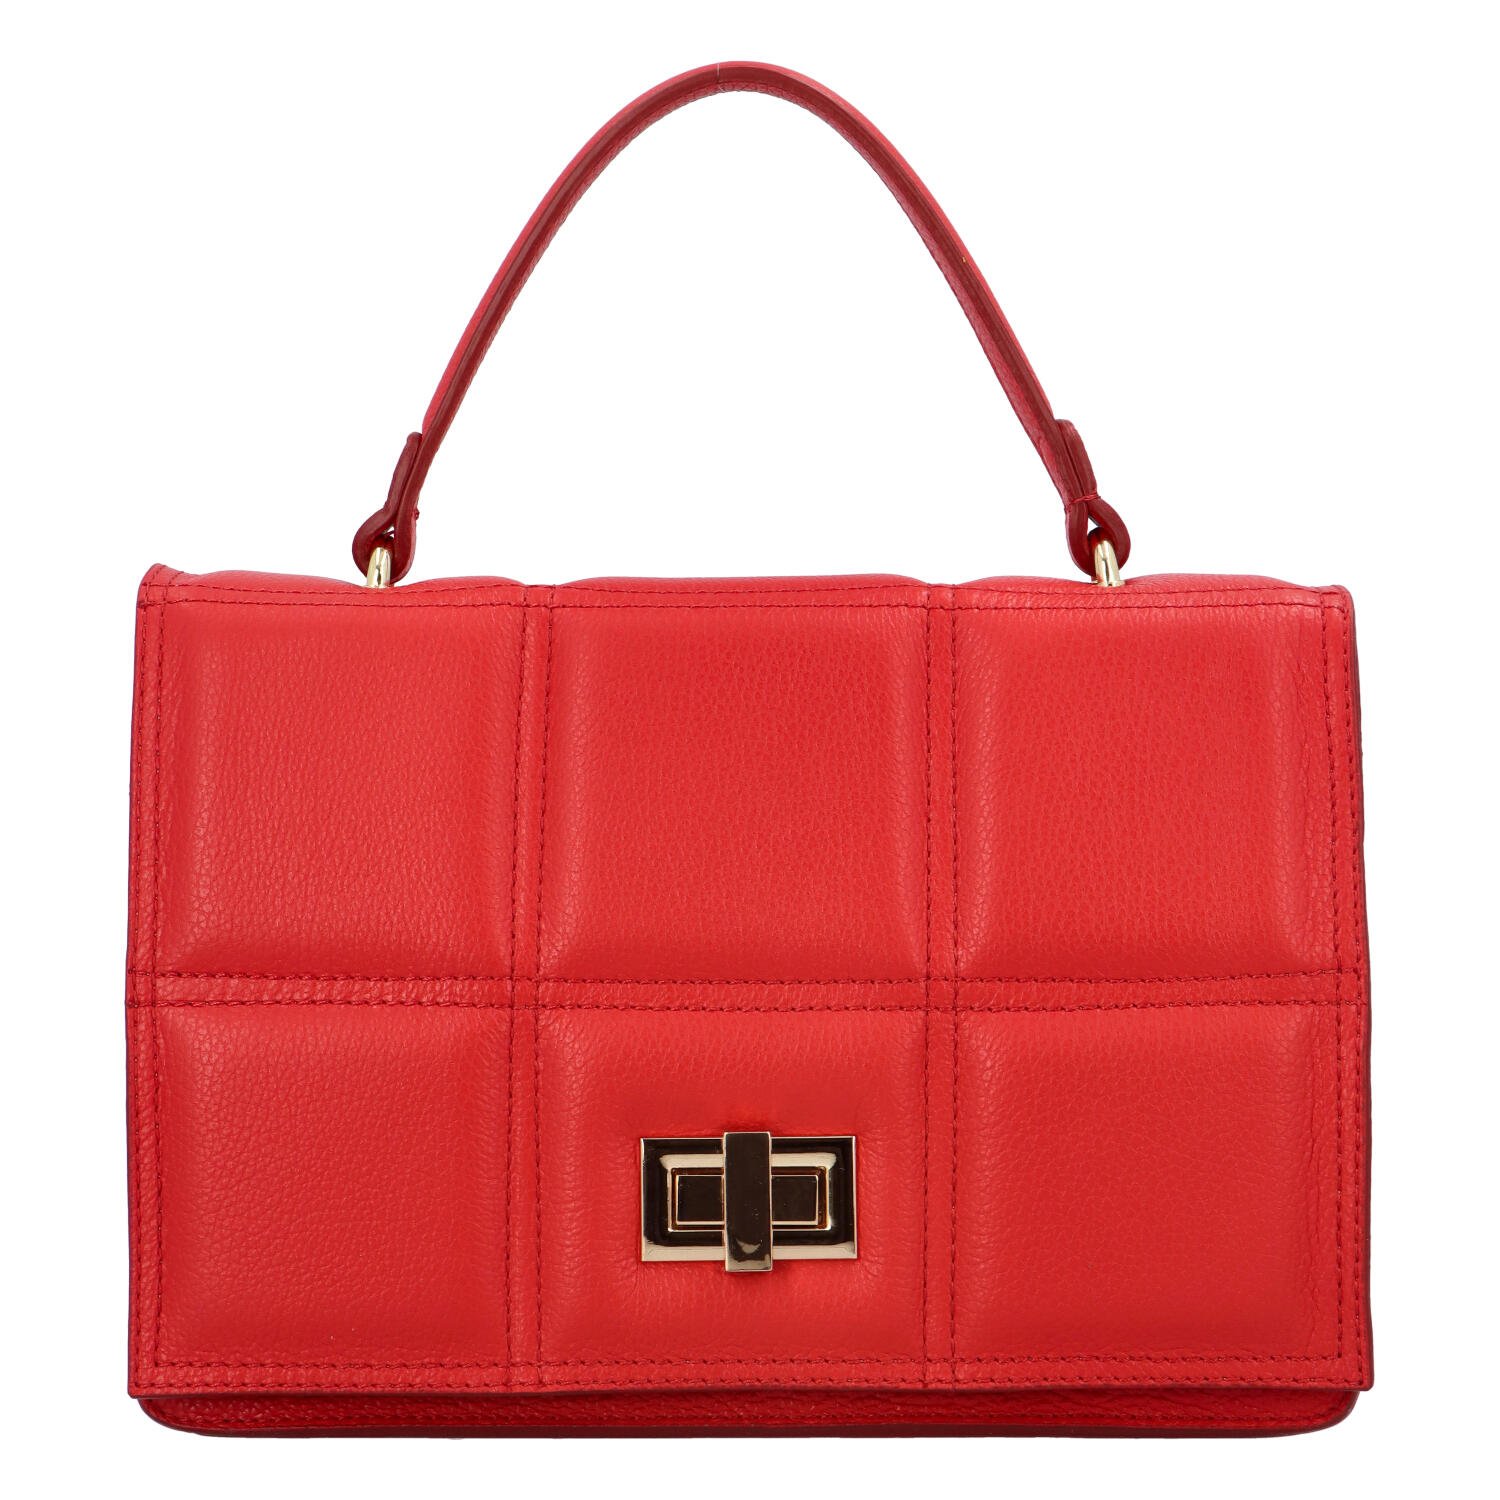 Dámská kožená kabelka do ruky červená - ItalY Diana červená